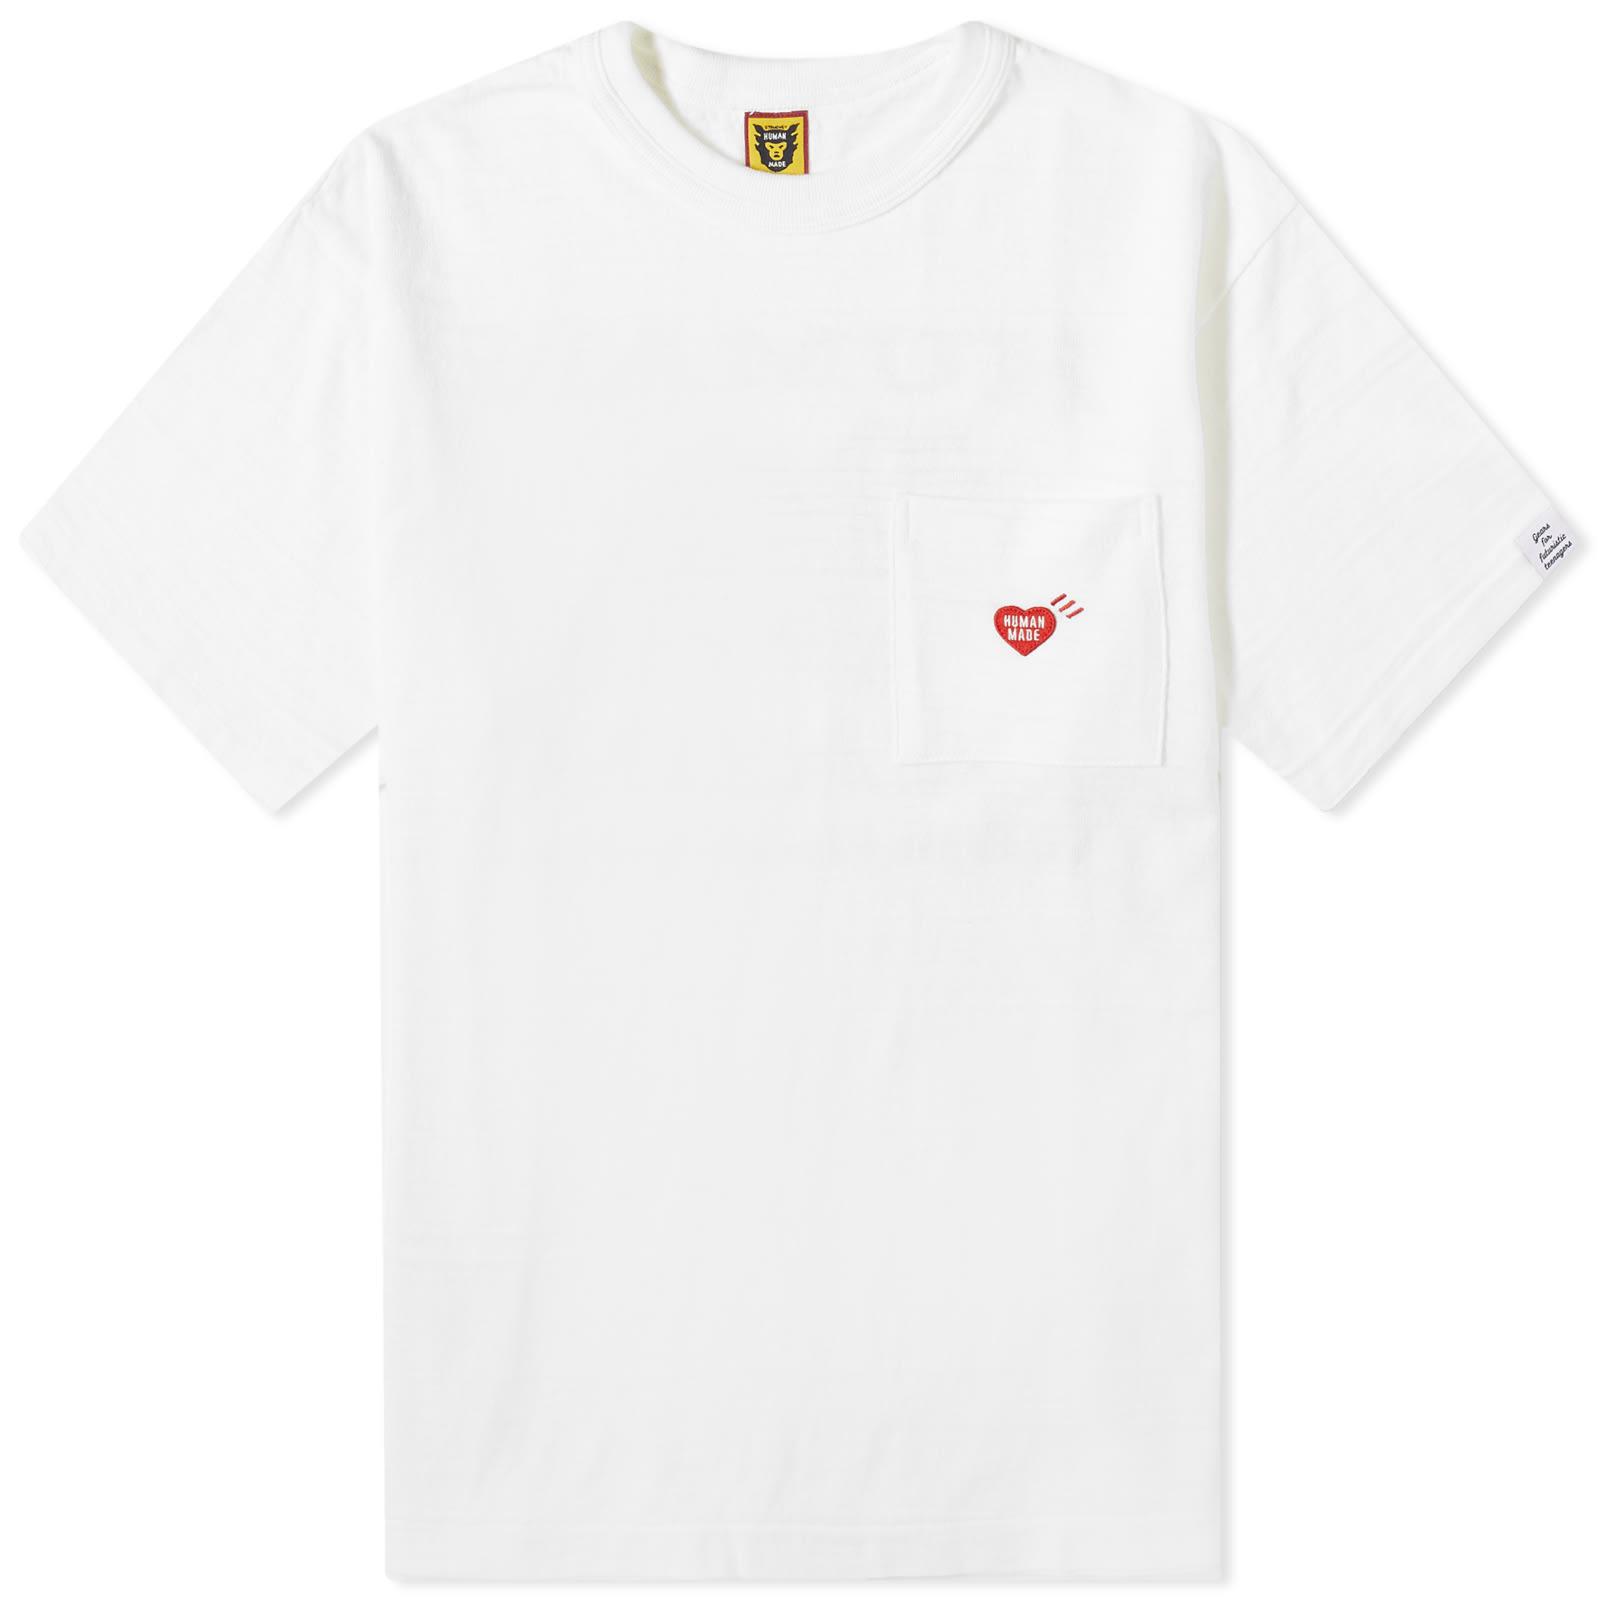 Human Made Pocket #2 Back Tiger Print T-shirt in White for Men